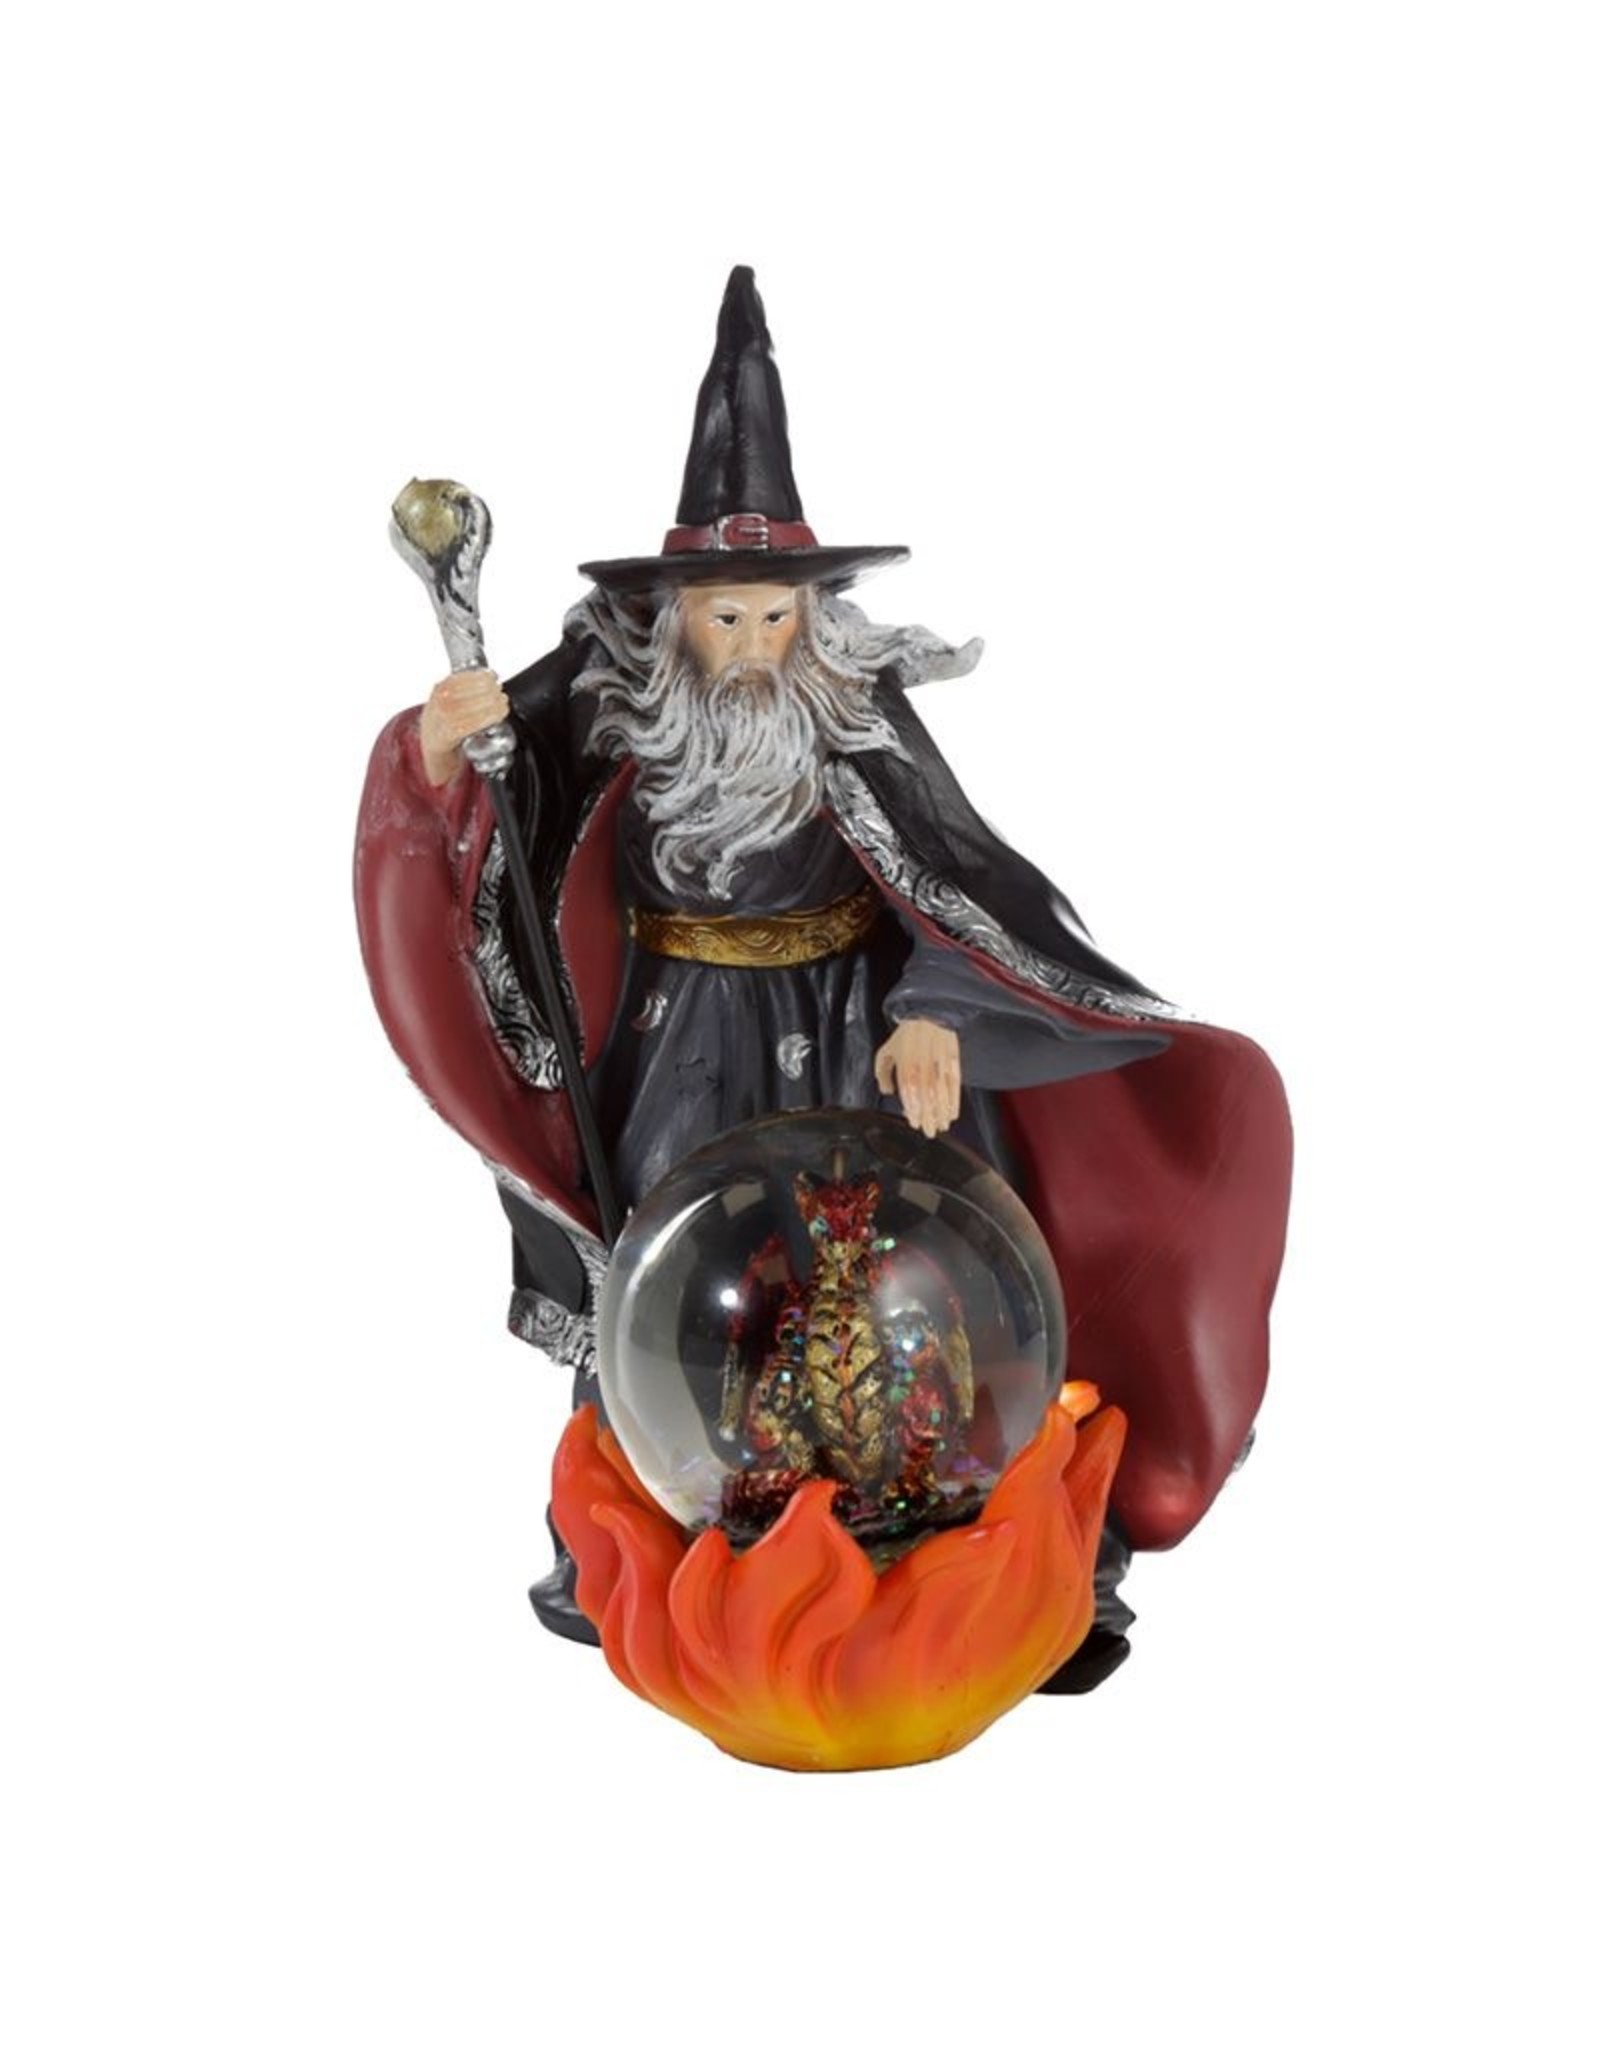 Spirit of the Sorcerer Giftware Figurines Collectables - Spirit of the Sorcerer Firedragon Sorcerer